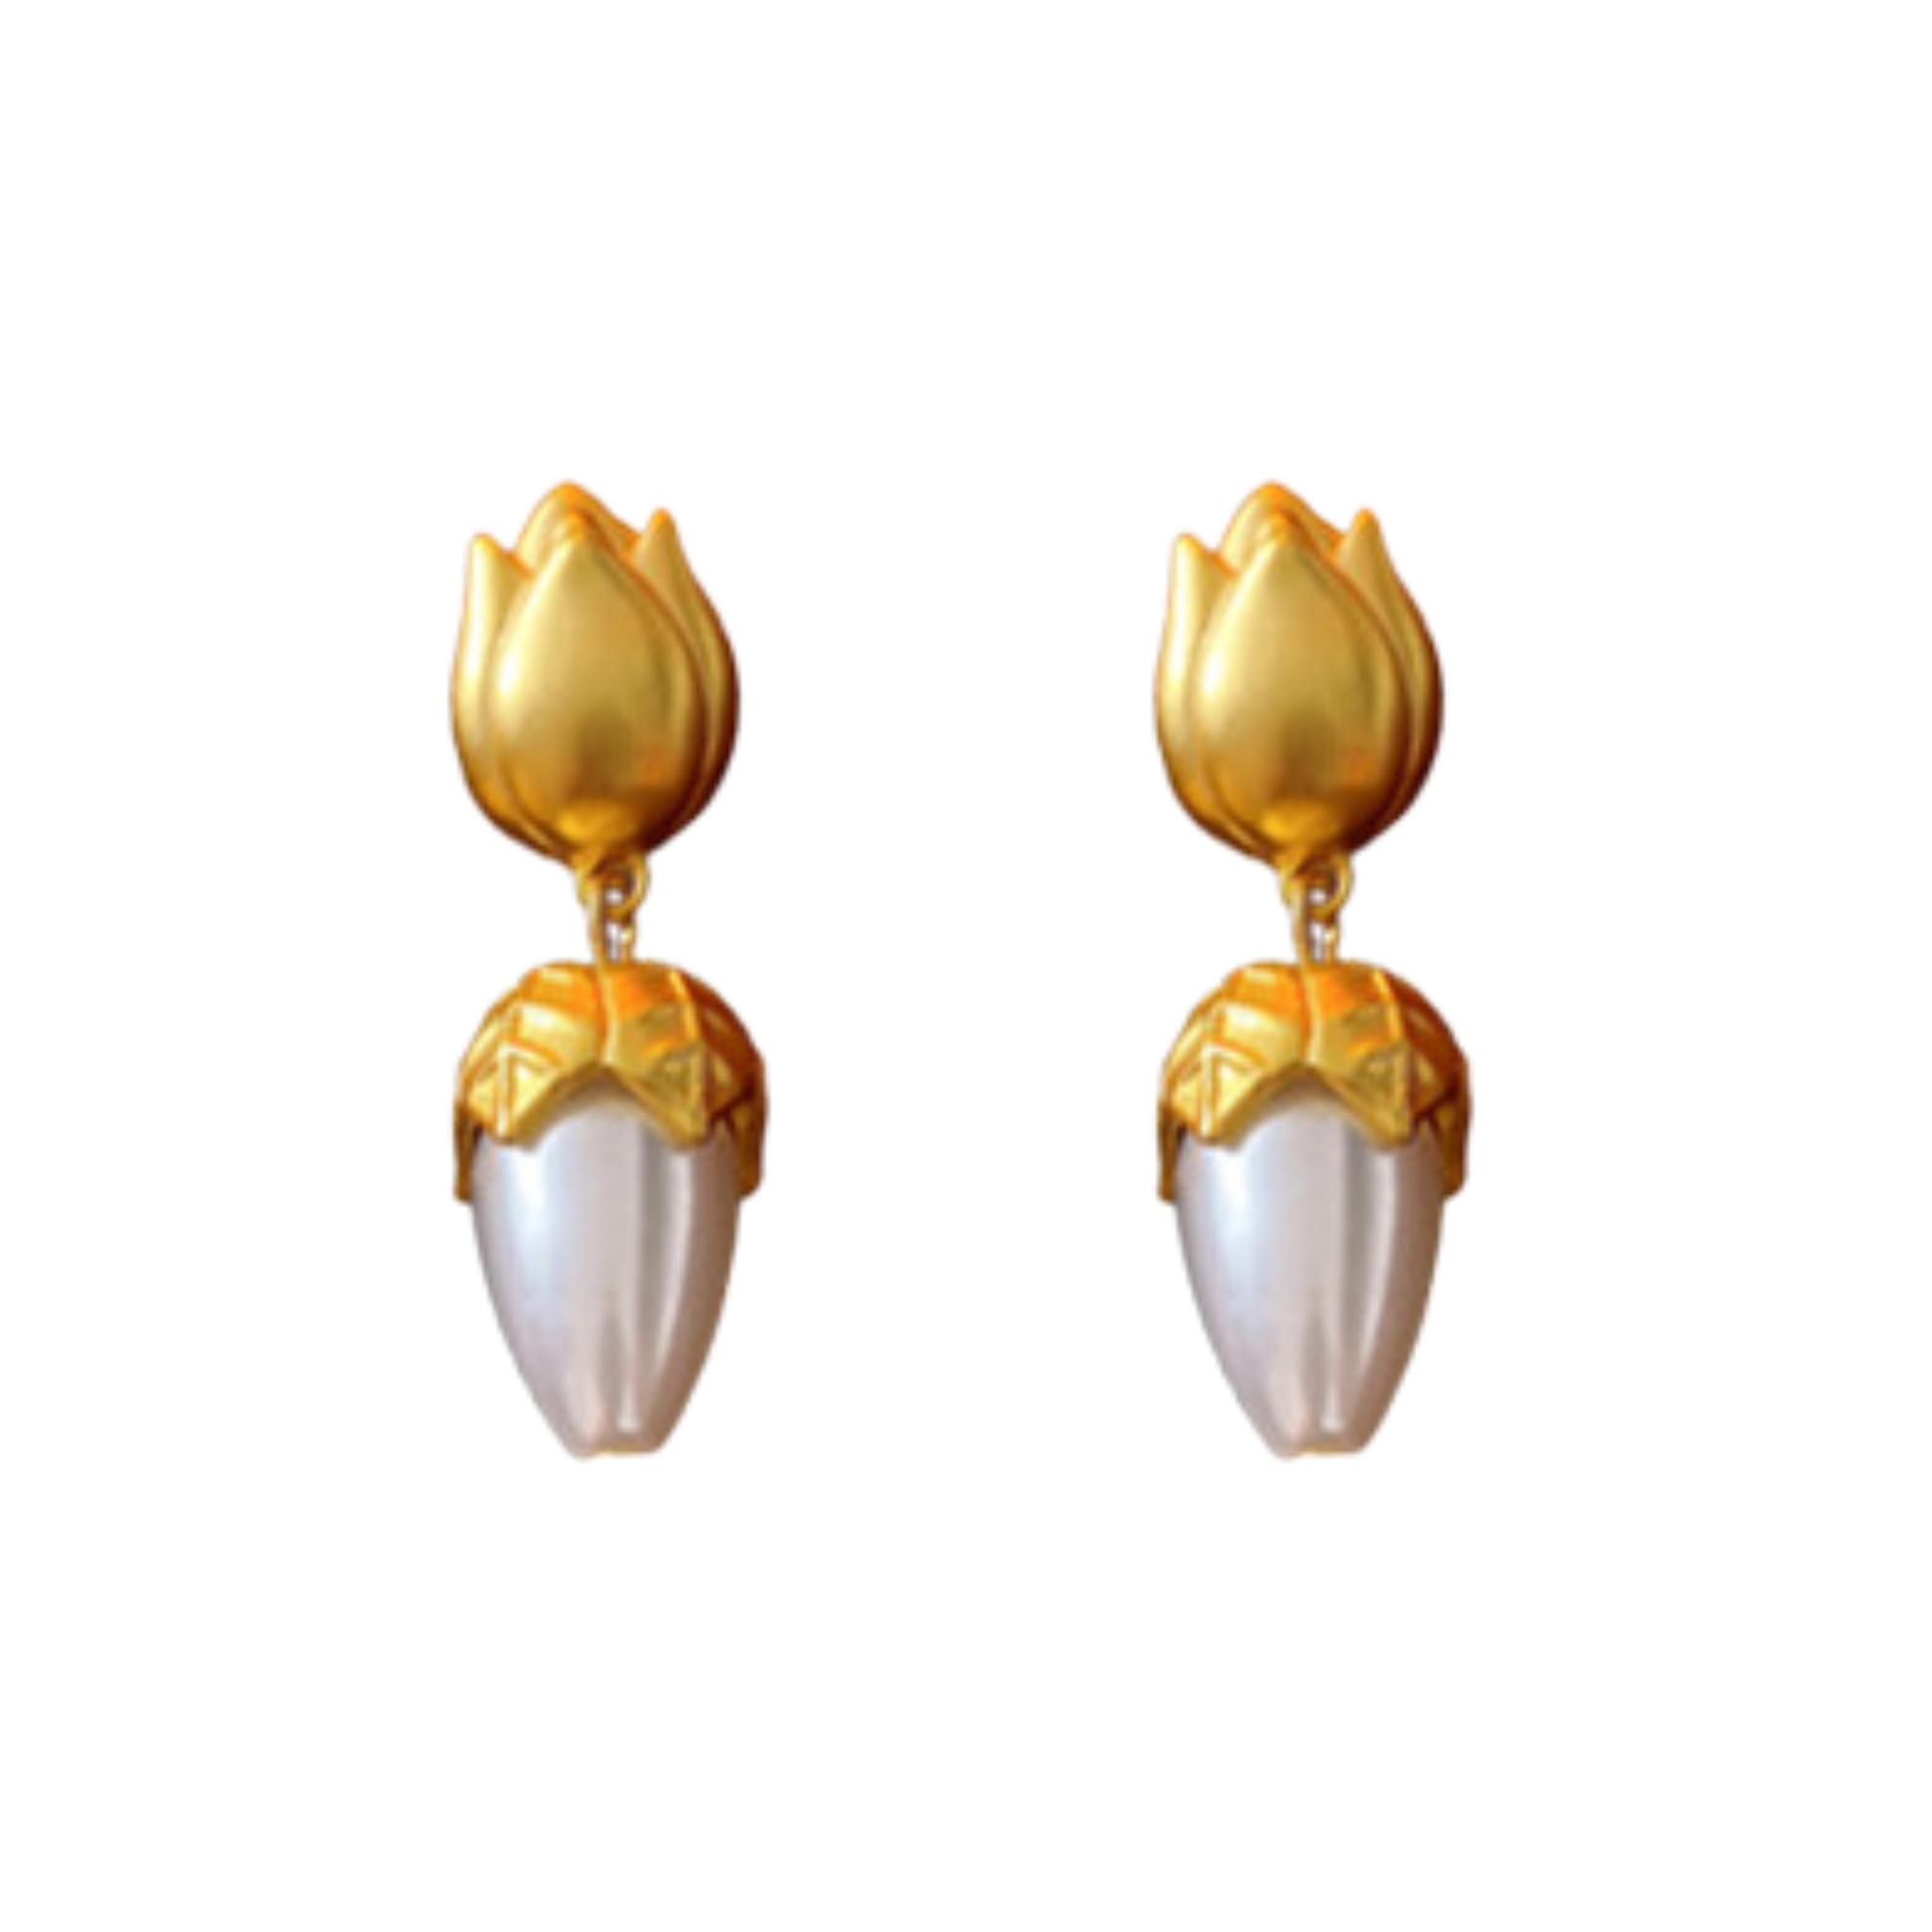 Tulip Drop Dangling Earrings - Pre Order: Ships Feb 29